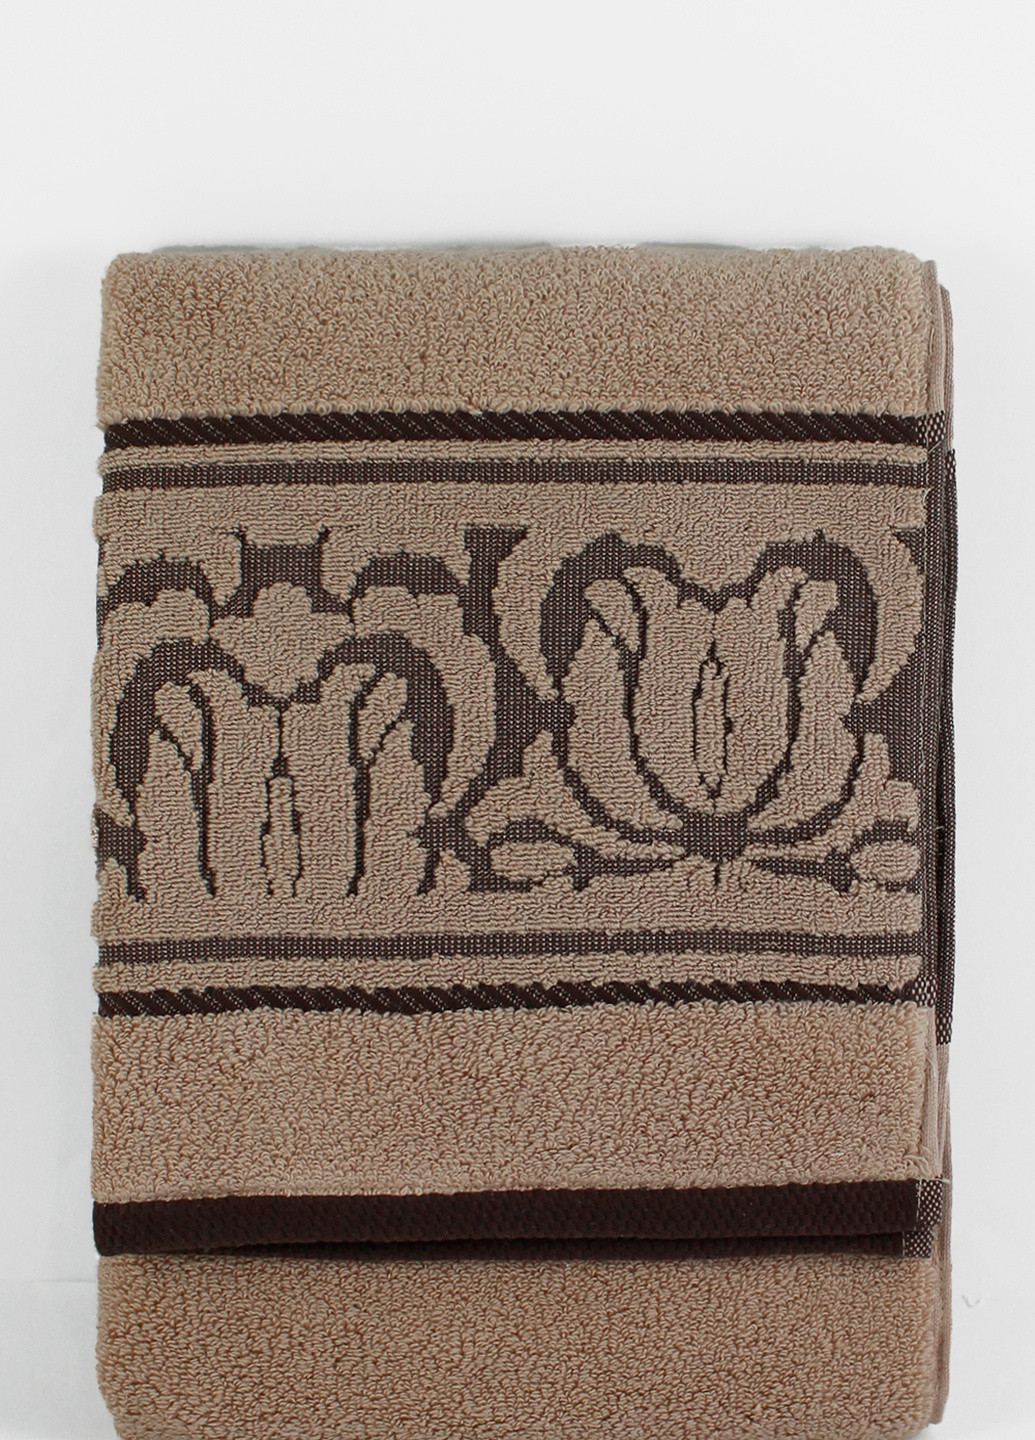 Bulgaria-Tex полотенце махровое bella, microcotton, капучино, размер 80x160 cm светло-коричневый производство - Болгария